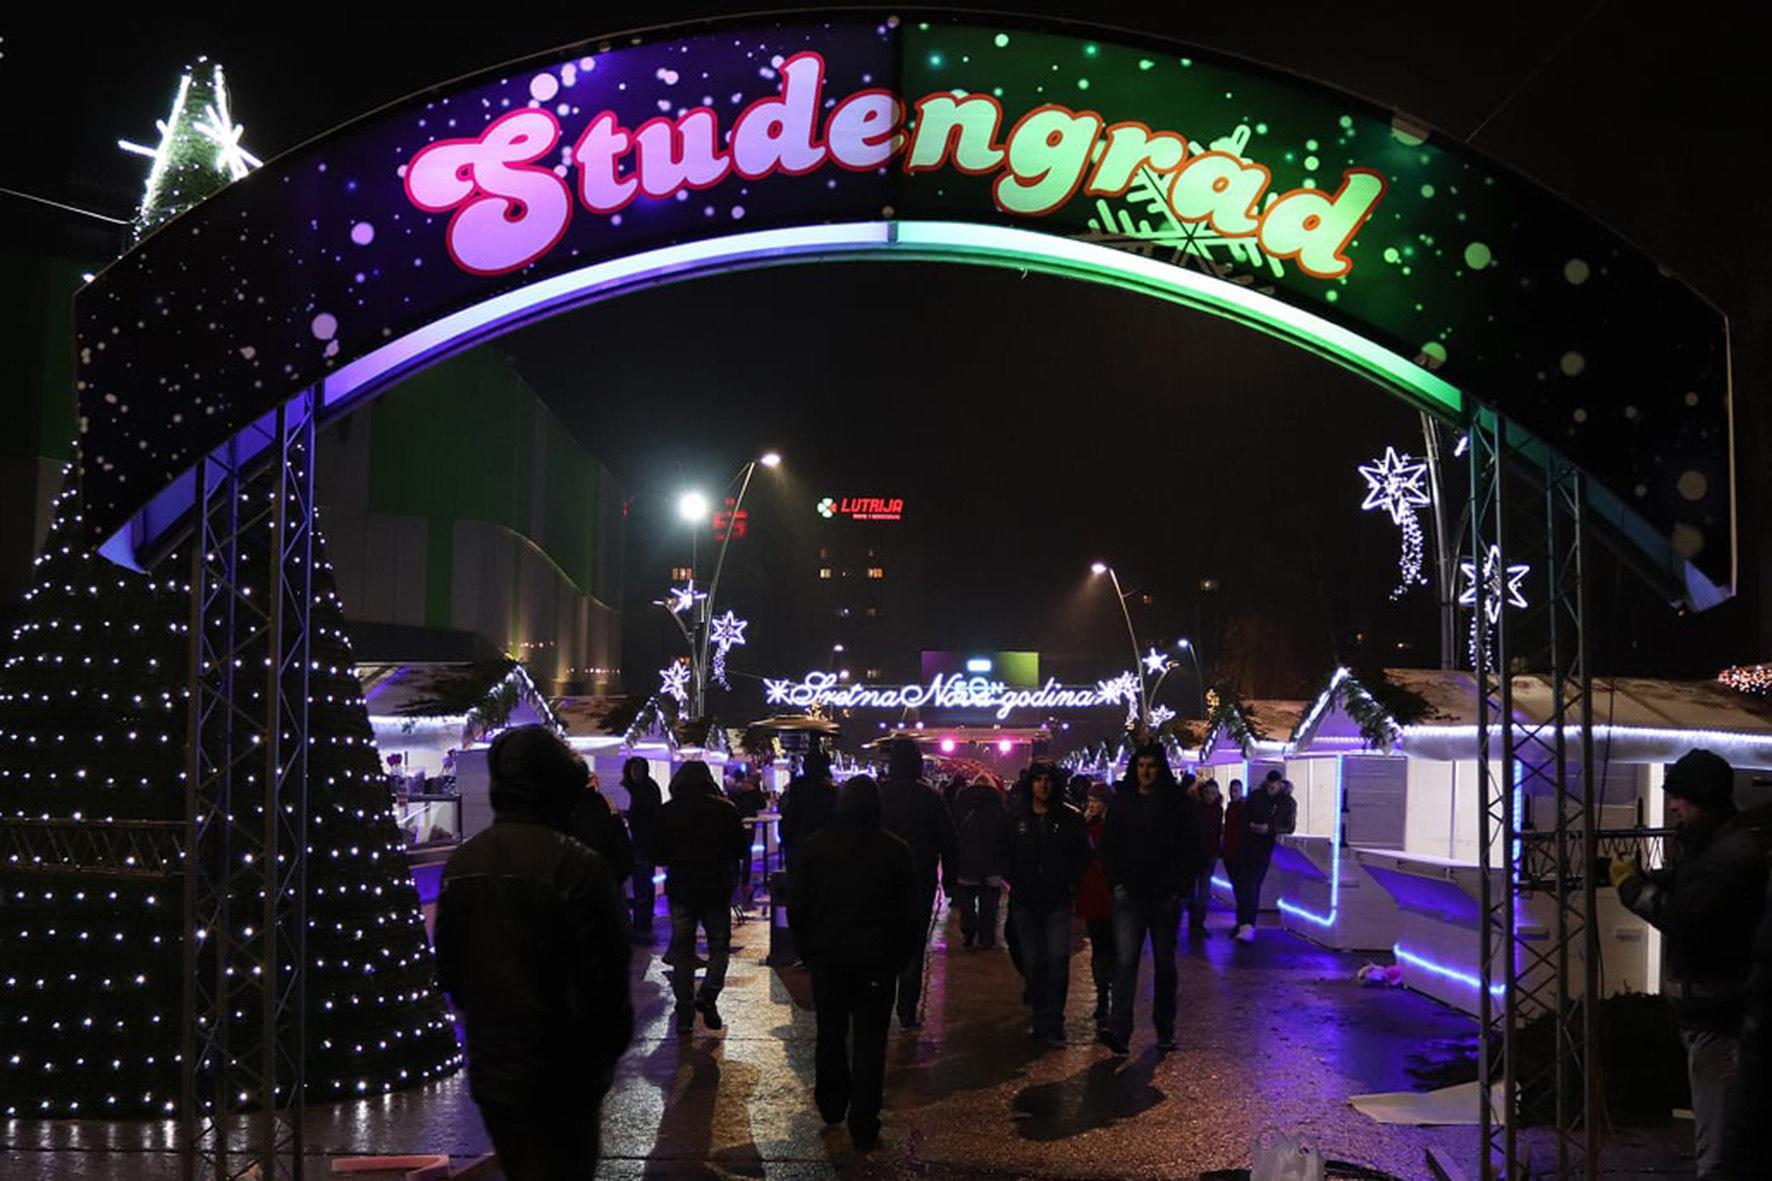 Počinje zimski festival "ZEnica ADventure", bogat sadržaj u centru grada